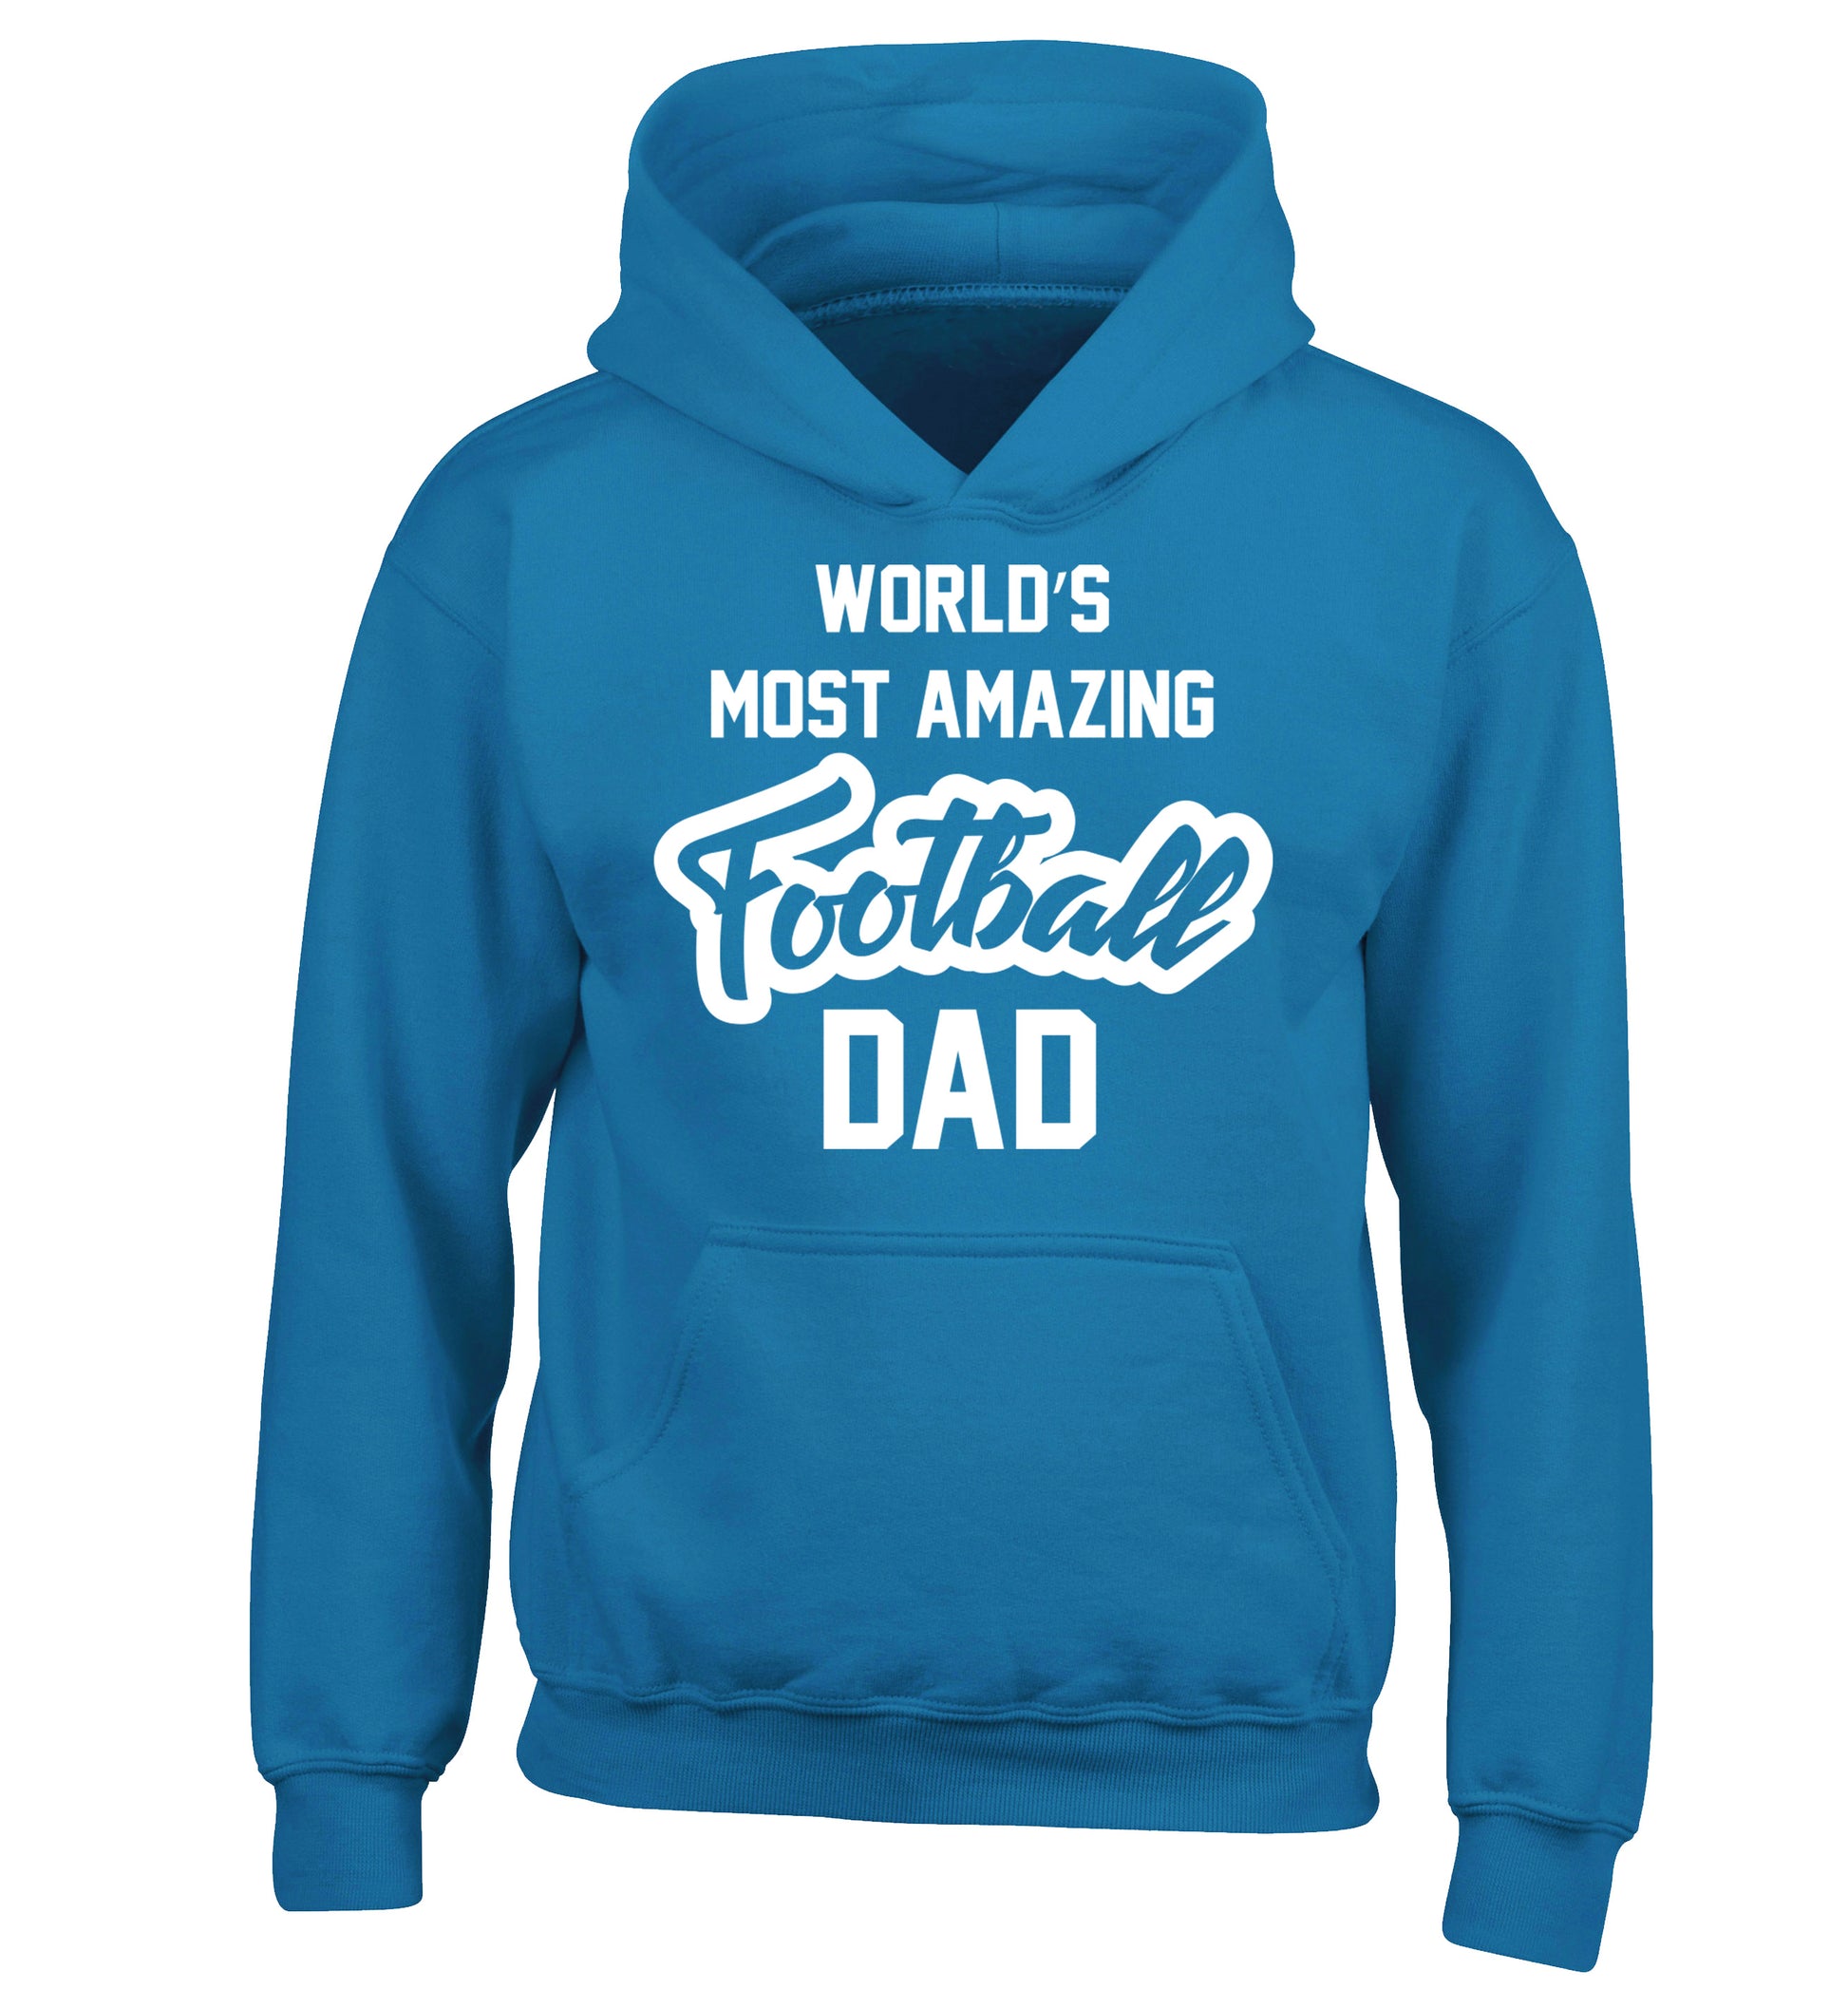 Worlds most amazing football dad children's blue hoodie 12-14 Years